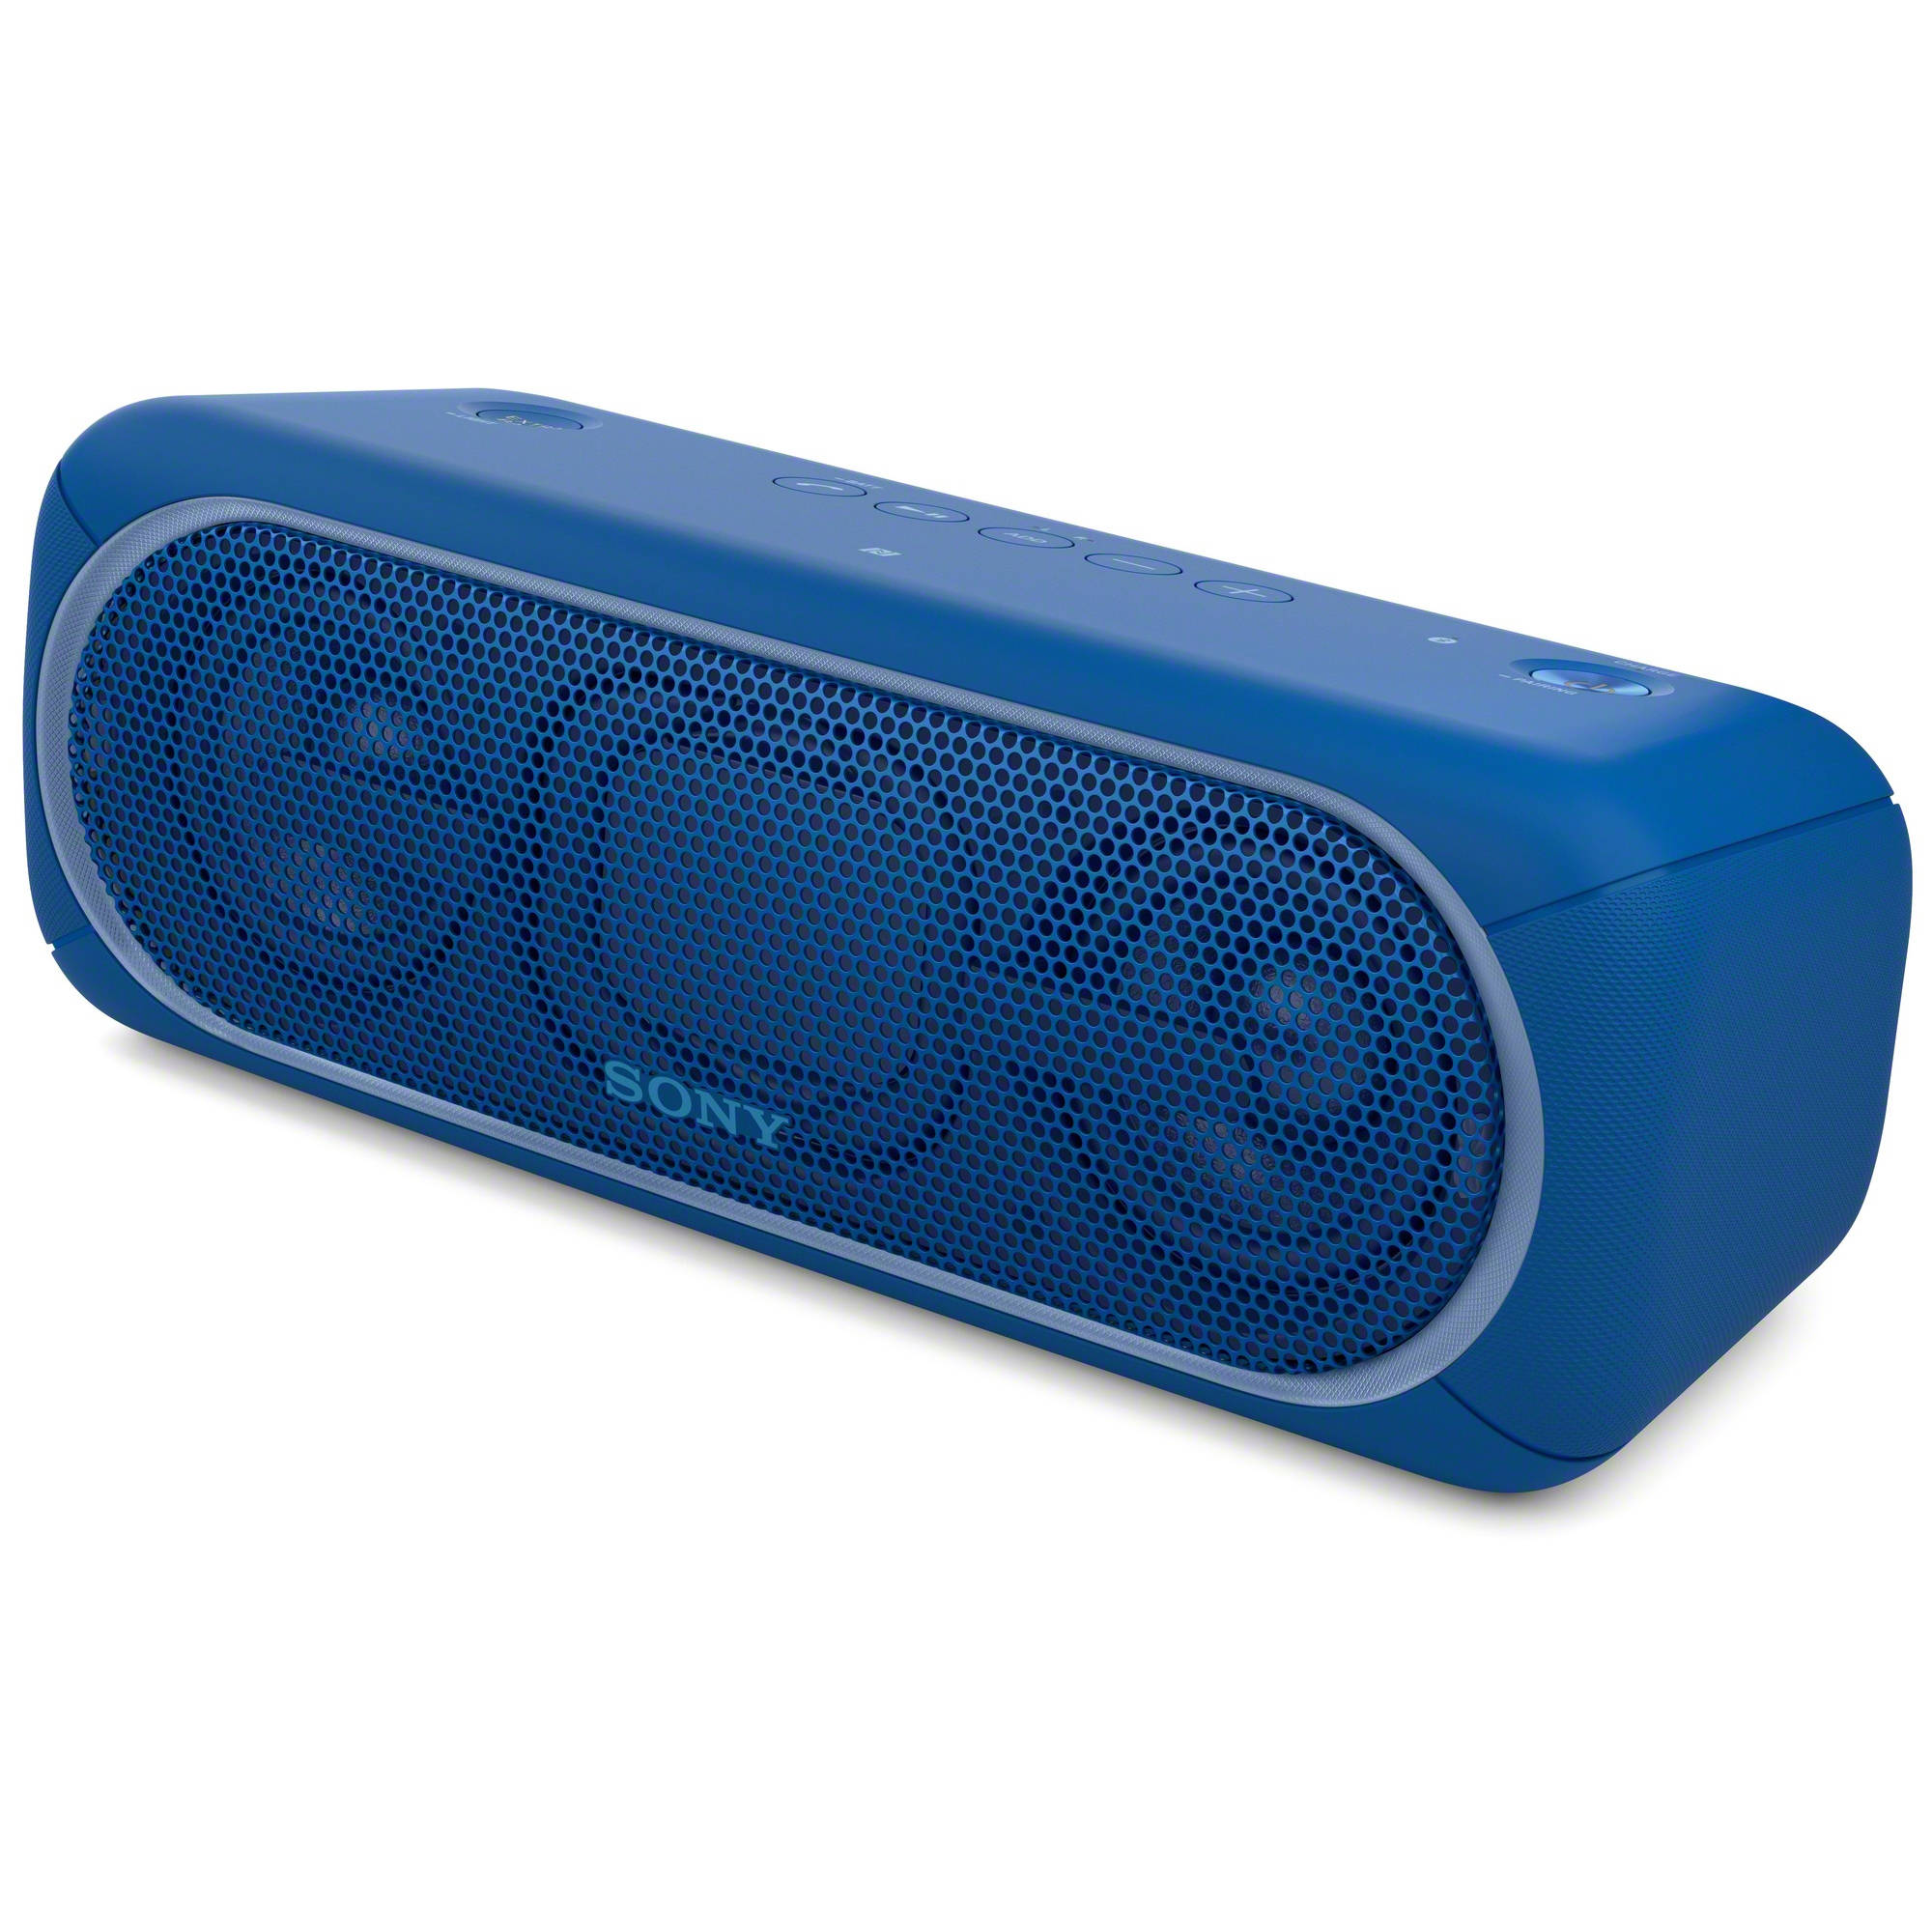 Sony Bluetooh Speaker